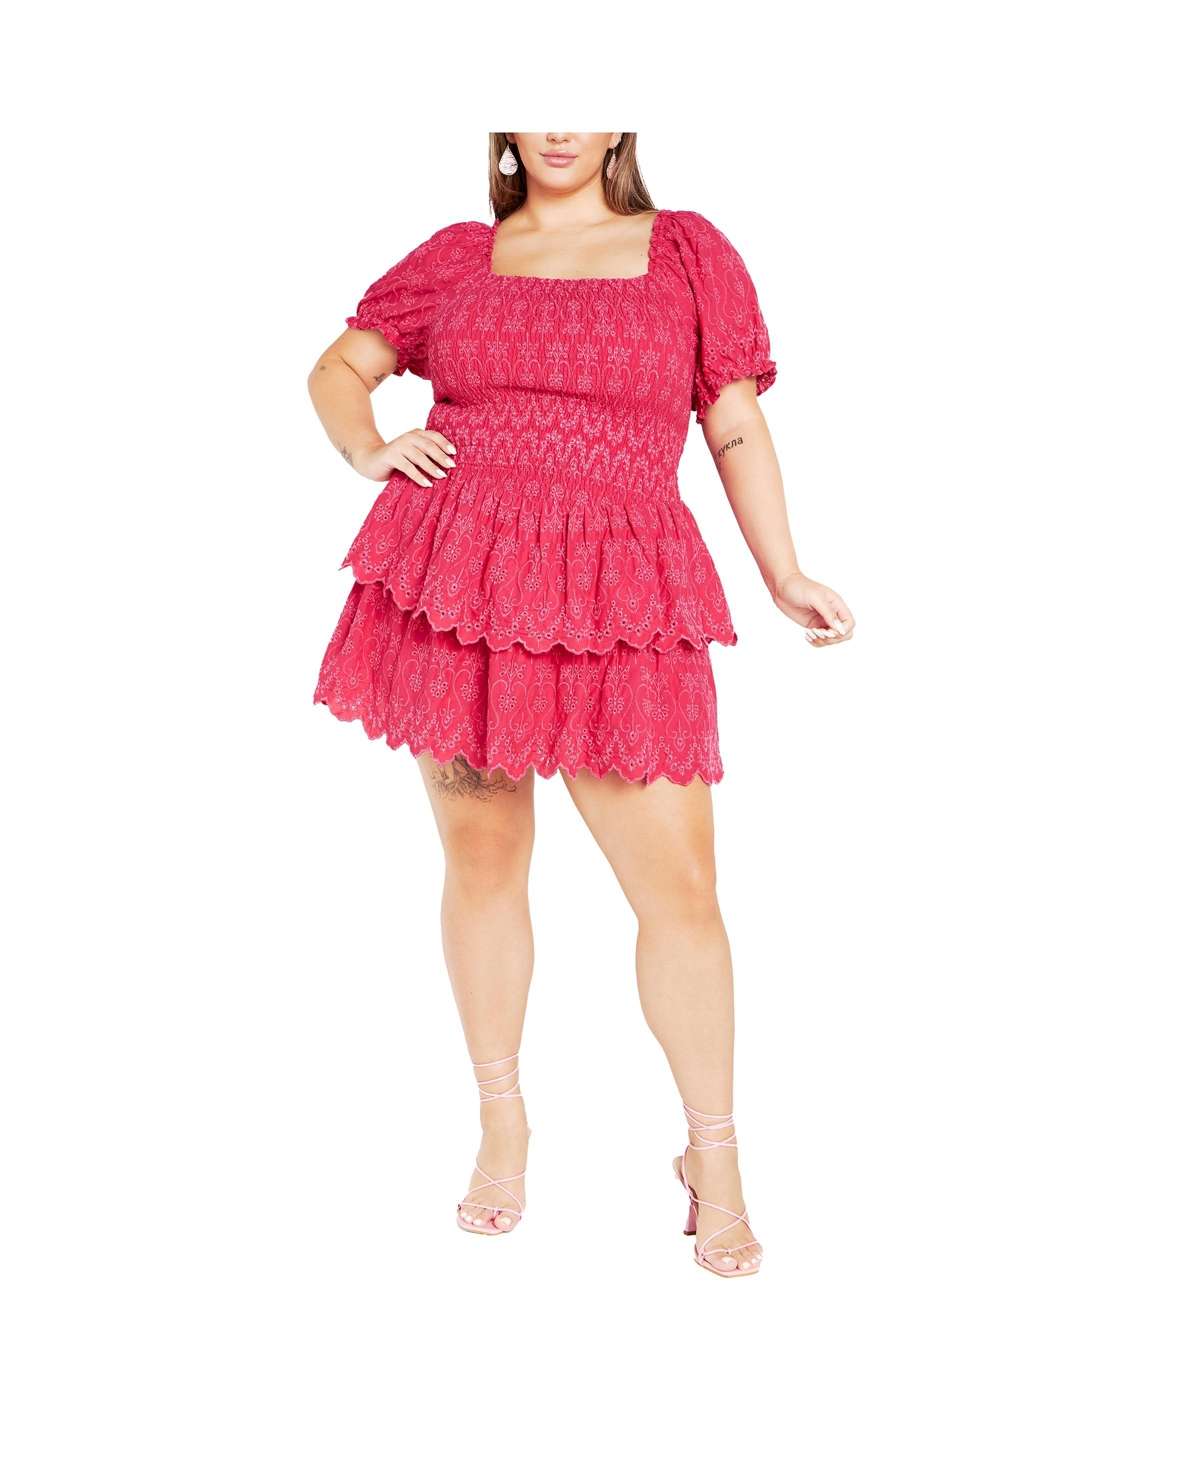 Women's Charley Dress - Pink sherbet